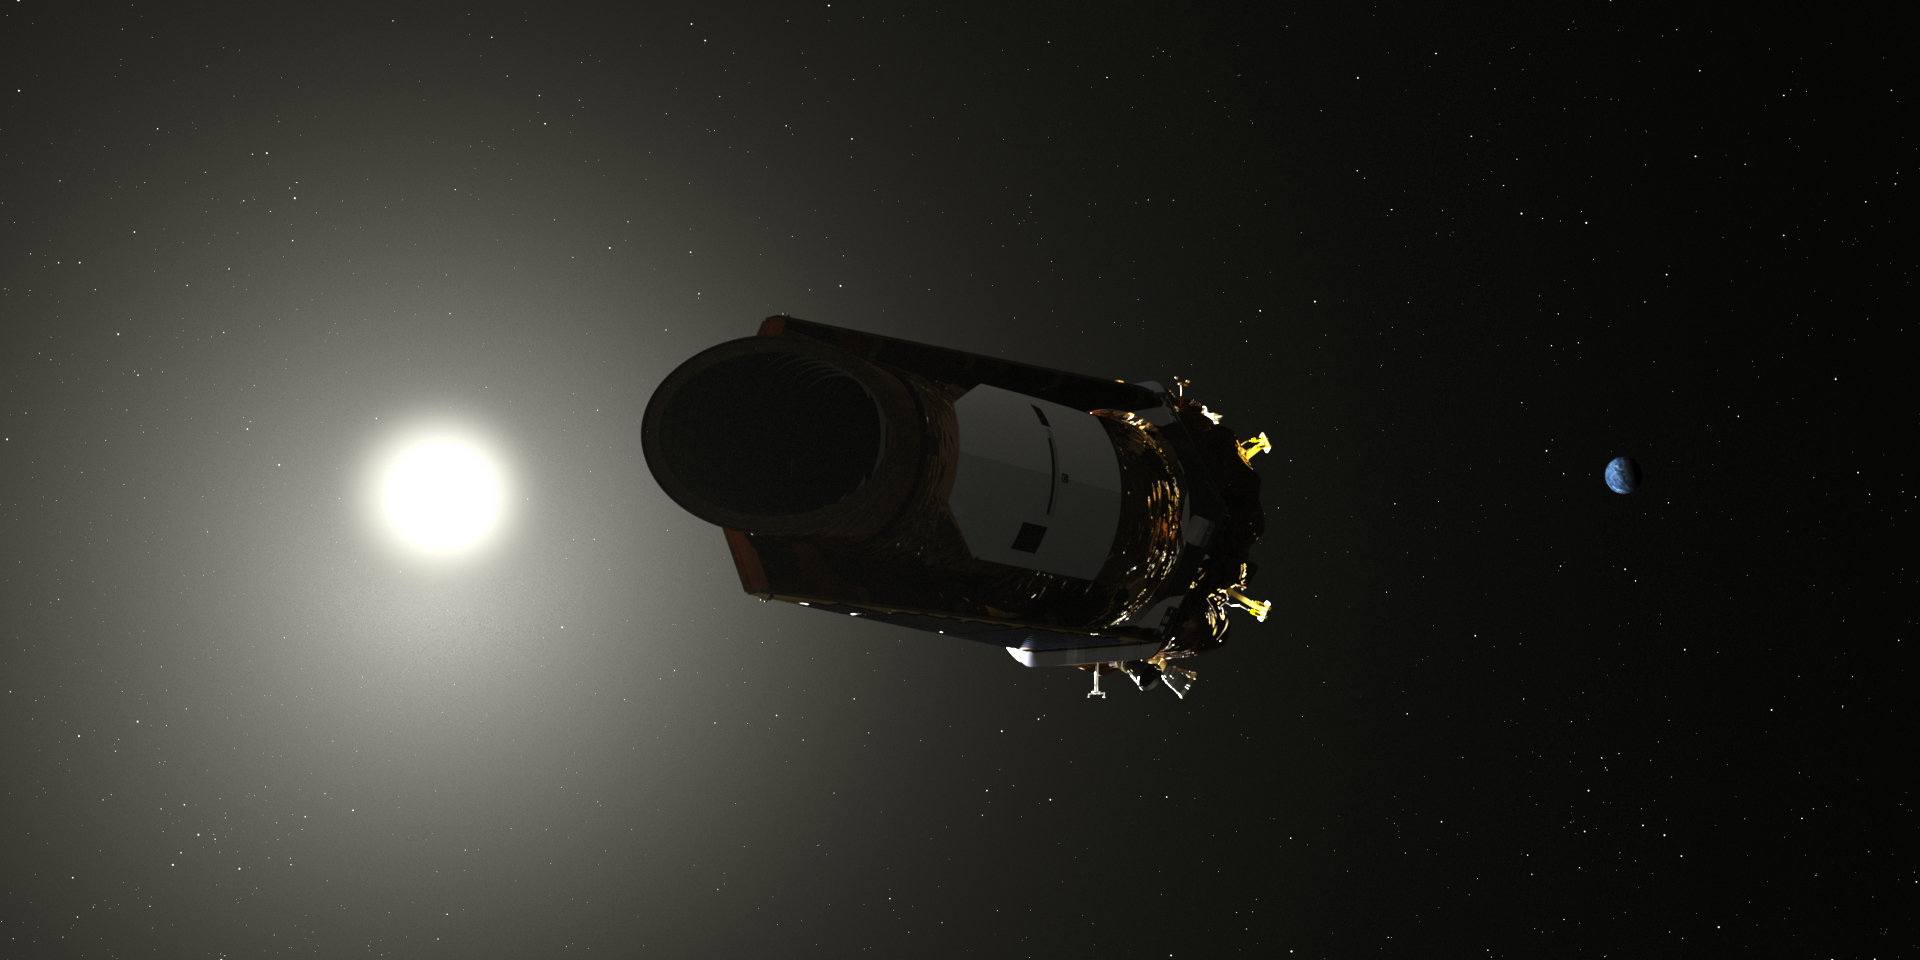 image of Kepler against dark background